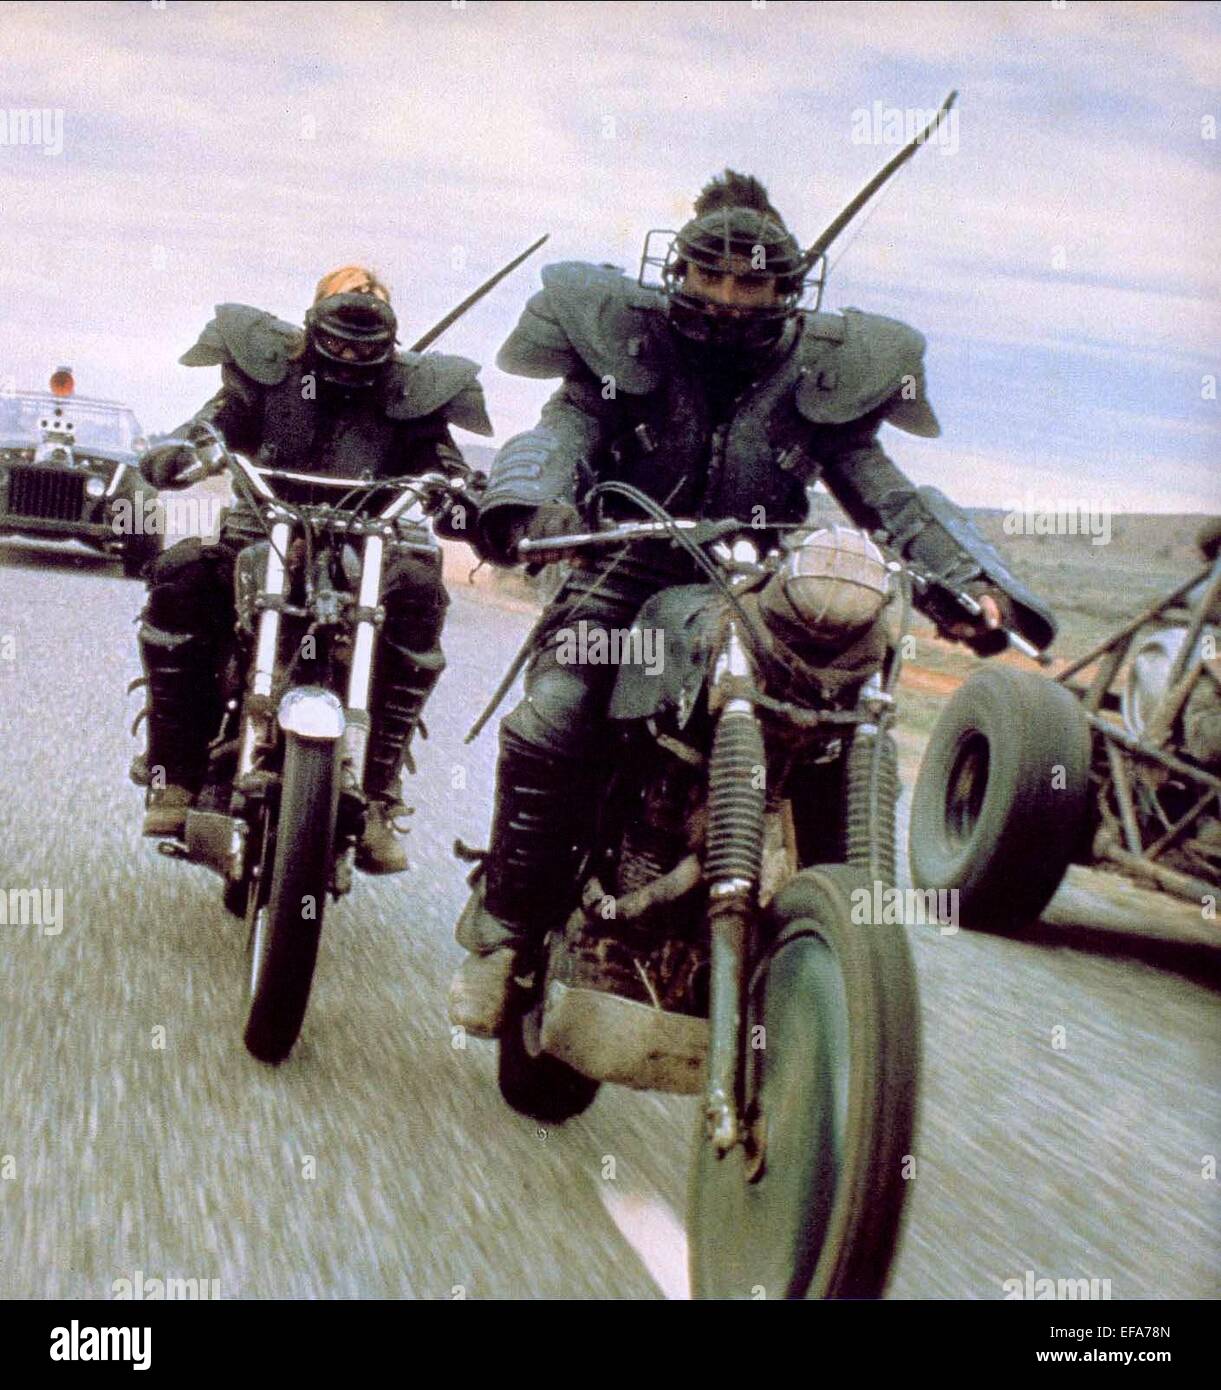 bandits-mad-max-2-the-road-warrior-1981-EFA78N.jpg